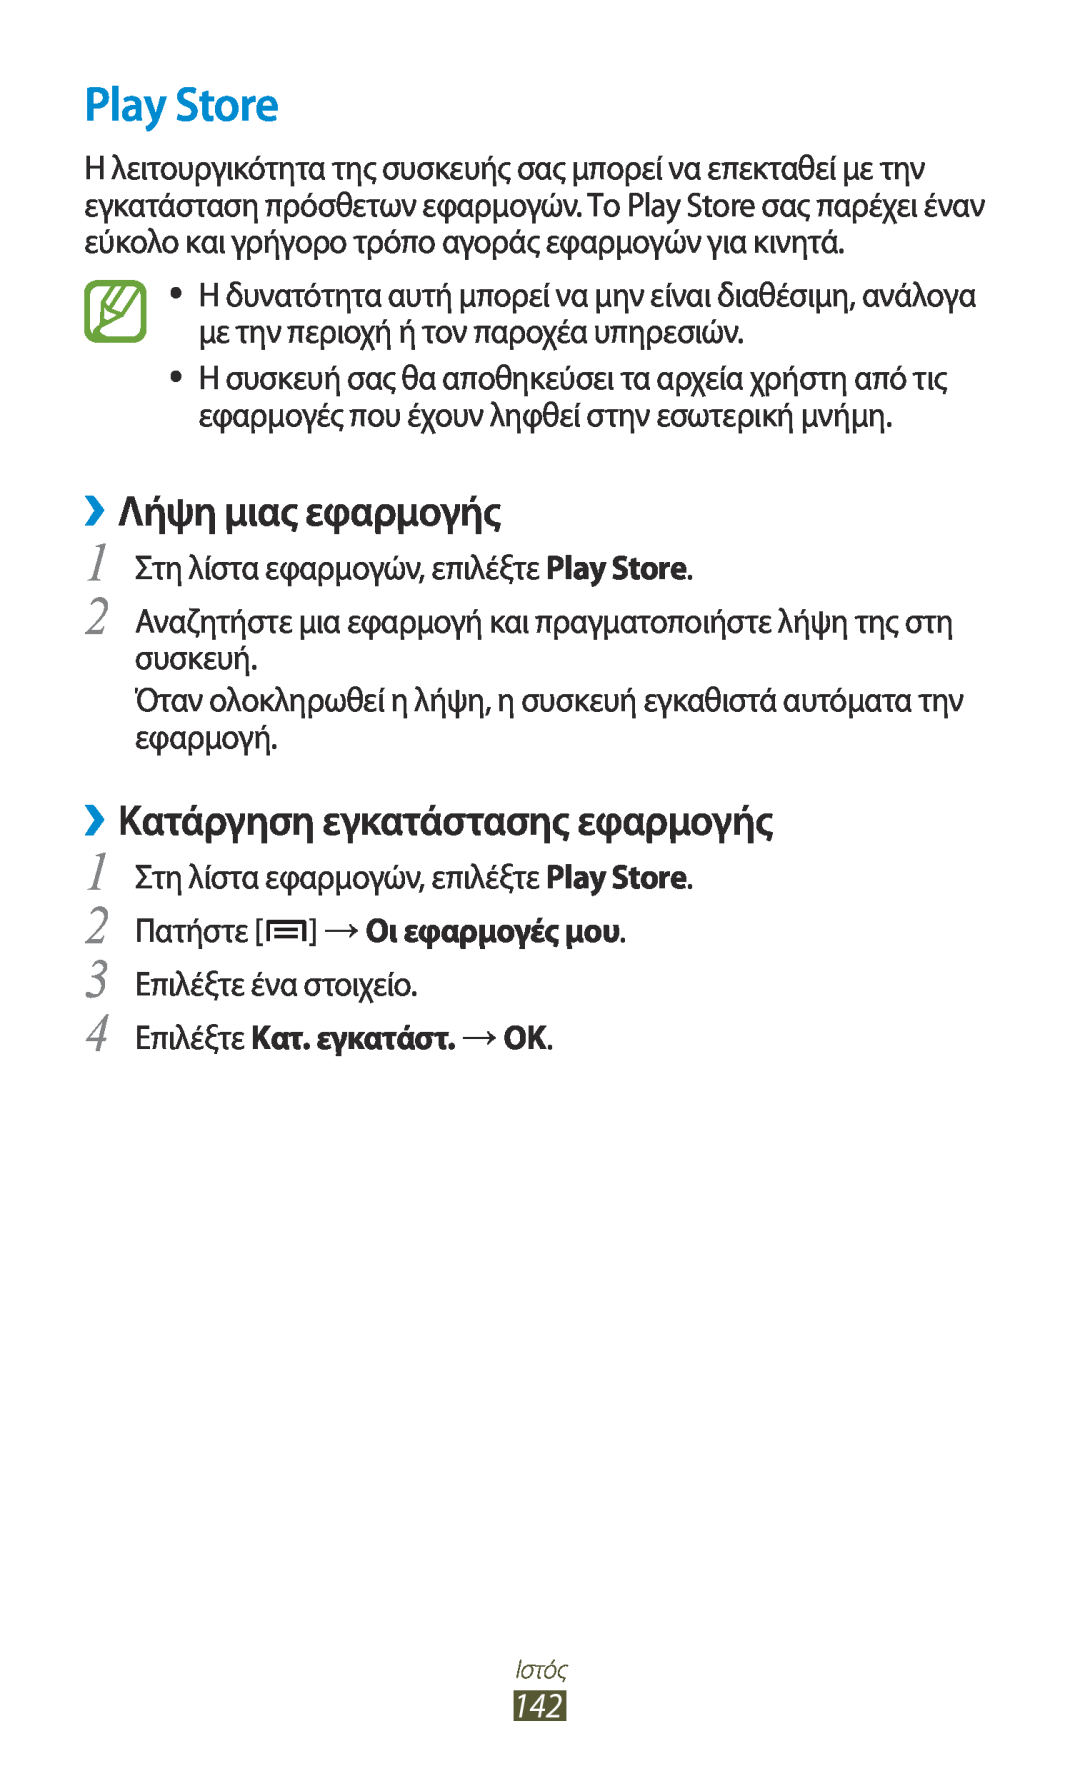 Samsung GT-N7000ZBACYO Play Store, ››Λήψη μιας εφαρμογής, ››Κατάργηση εγκατάστασης εφαρμογής, 2 Πατήστε →Οι εφαρμογές μου 